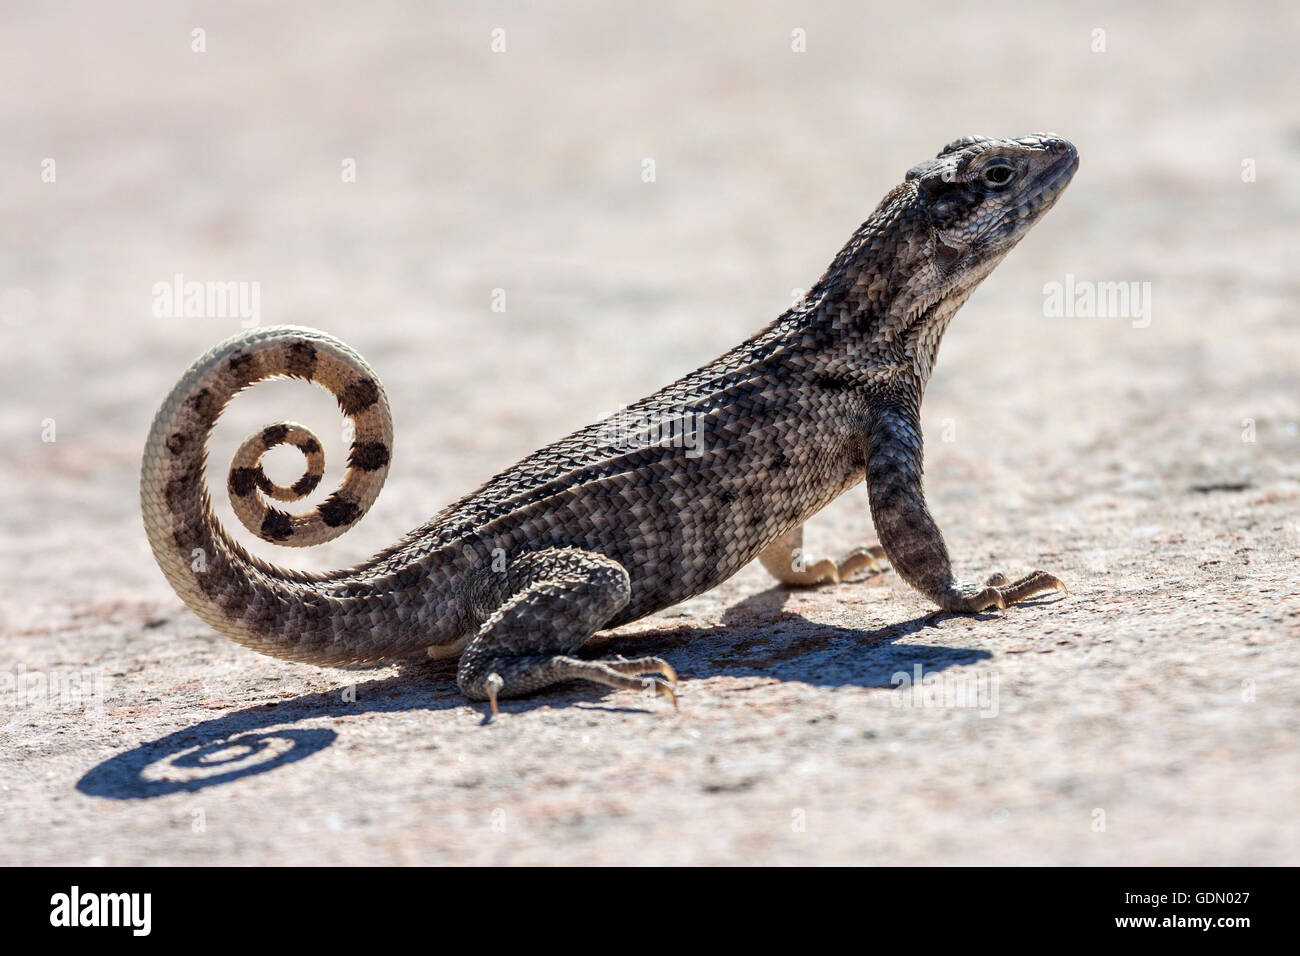 Northern curly-tailed lizard (Leiocephalus), Cuba Stock Photo